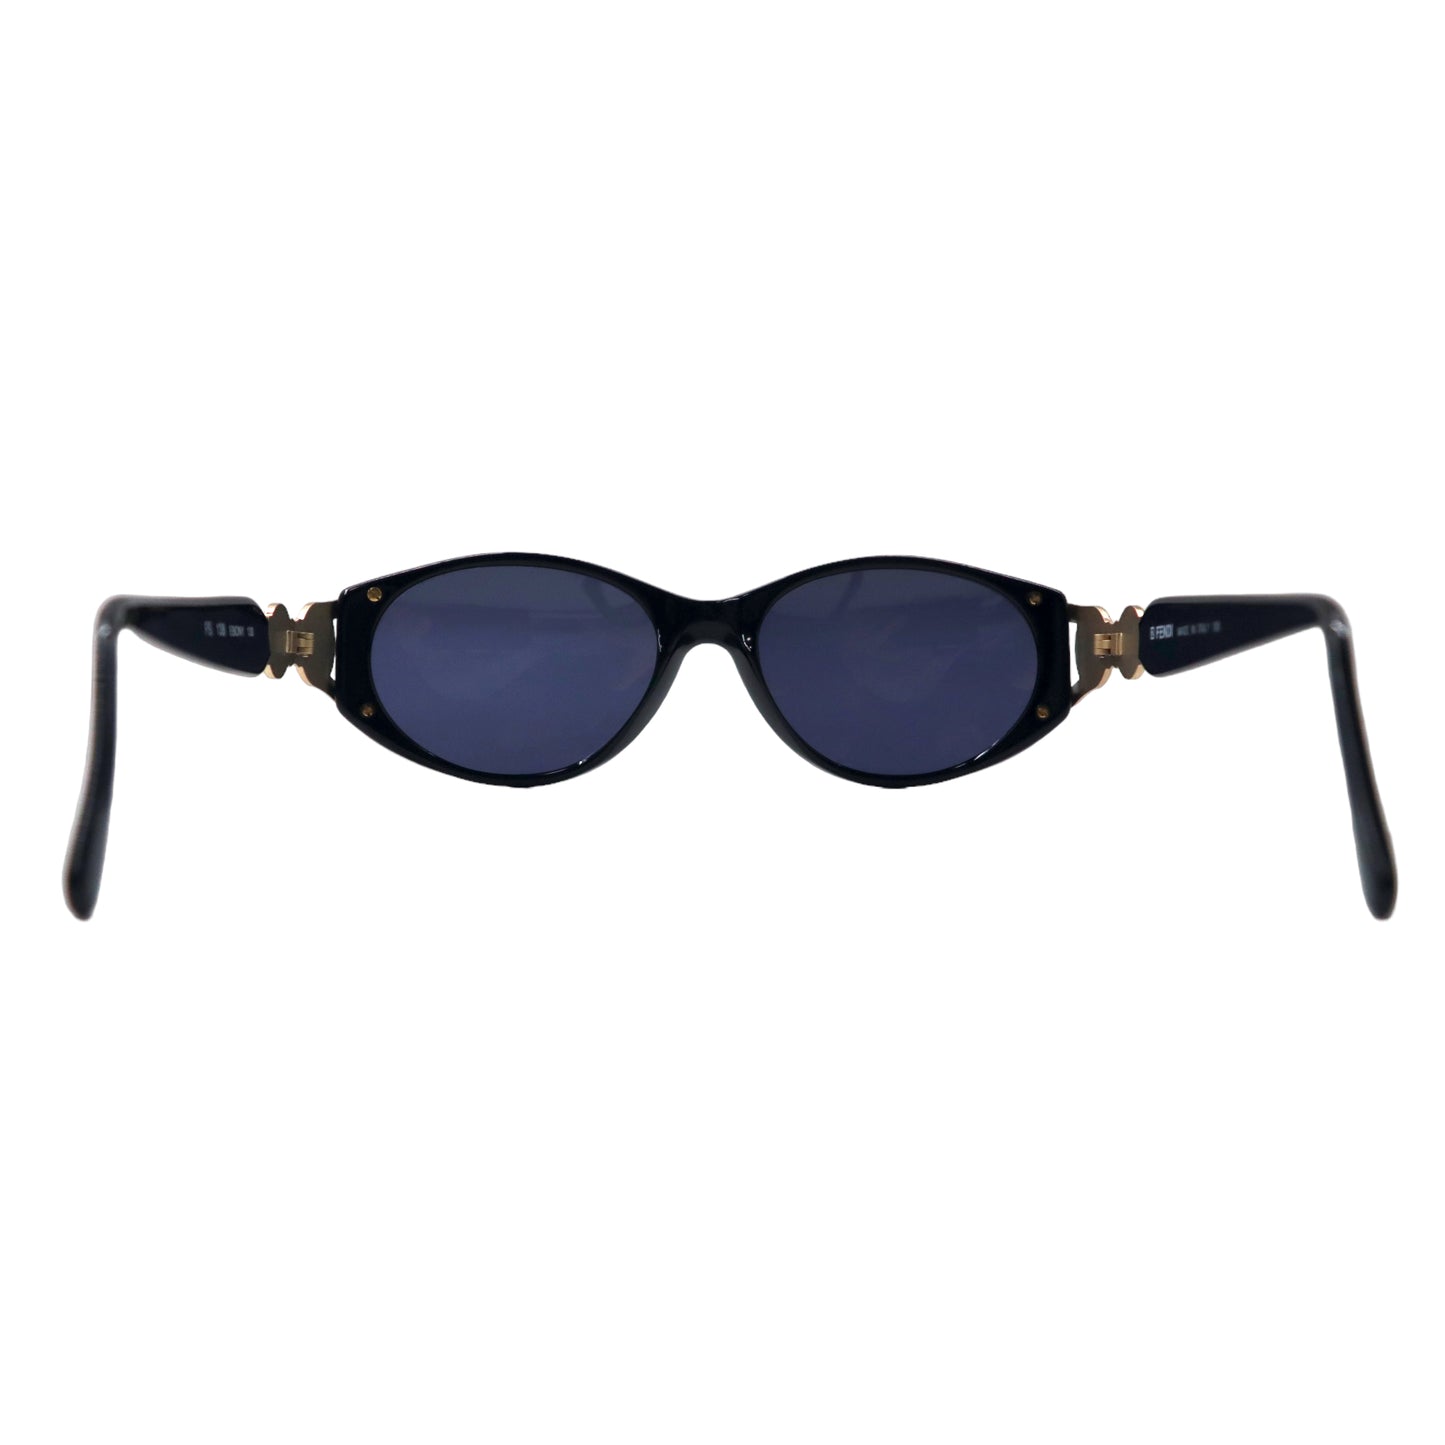 FENDI Sunglasses Black Gold Side Logo Coin FS 138 Ebony 130 